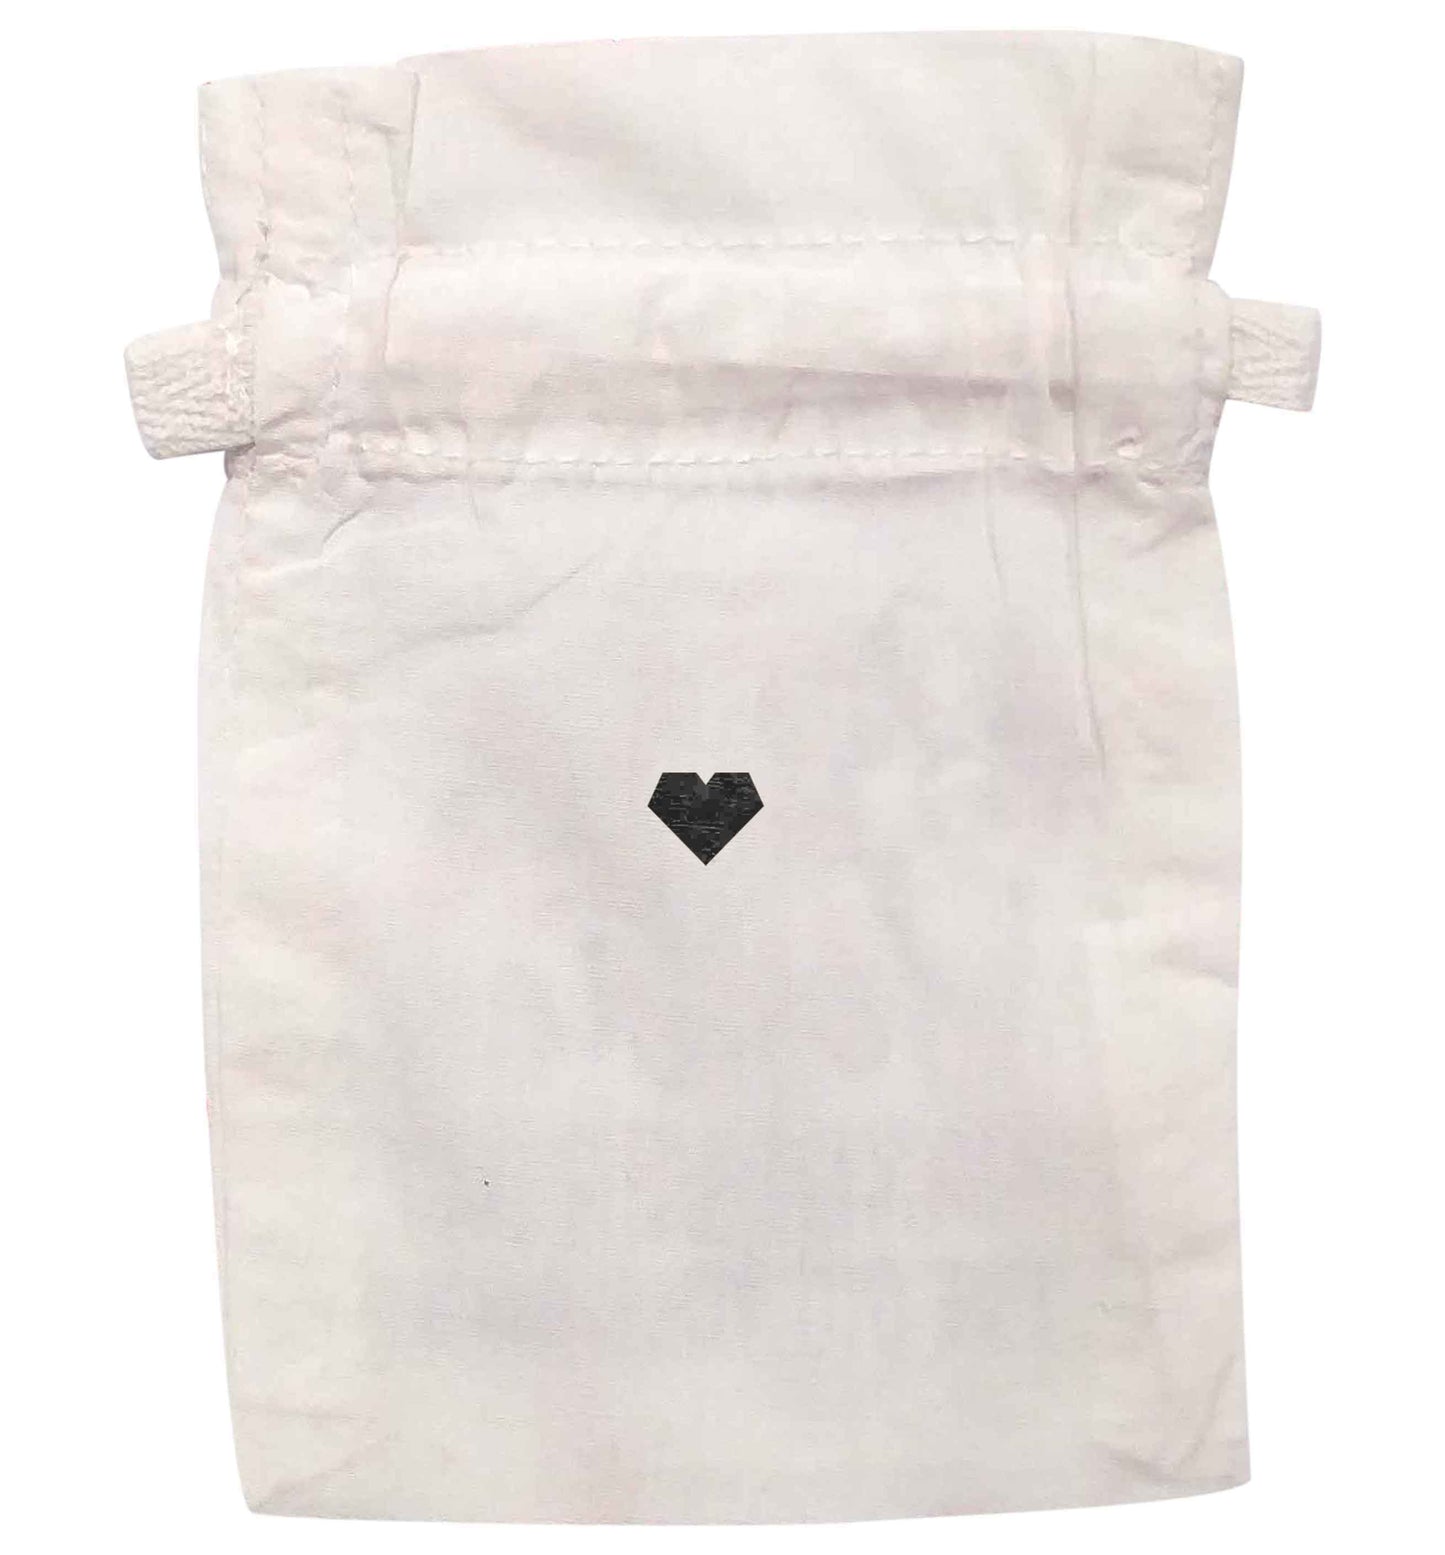 Tiny heart | XS - L | Pouch / Drawstring bag / Sack | Organic Cotton | Bulk discounts available!